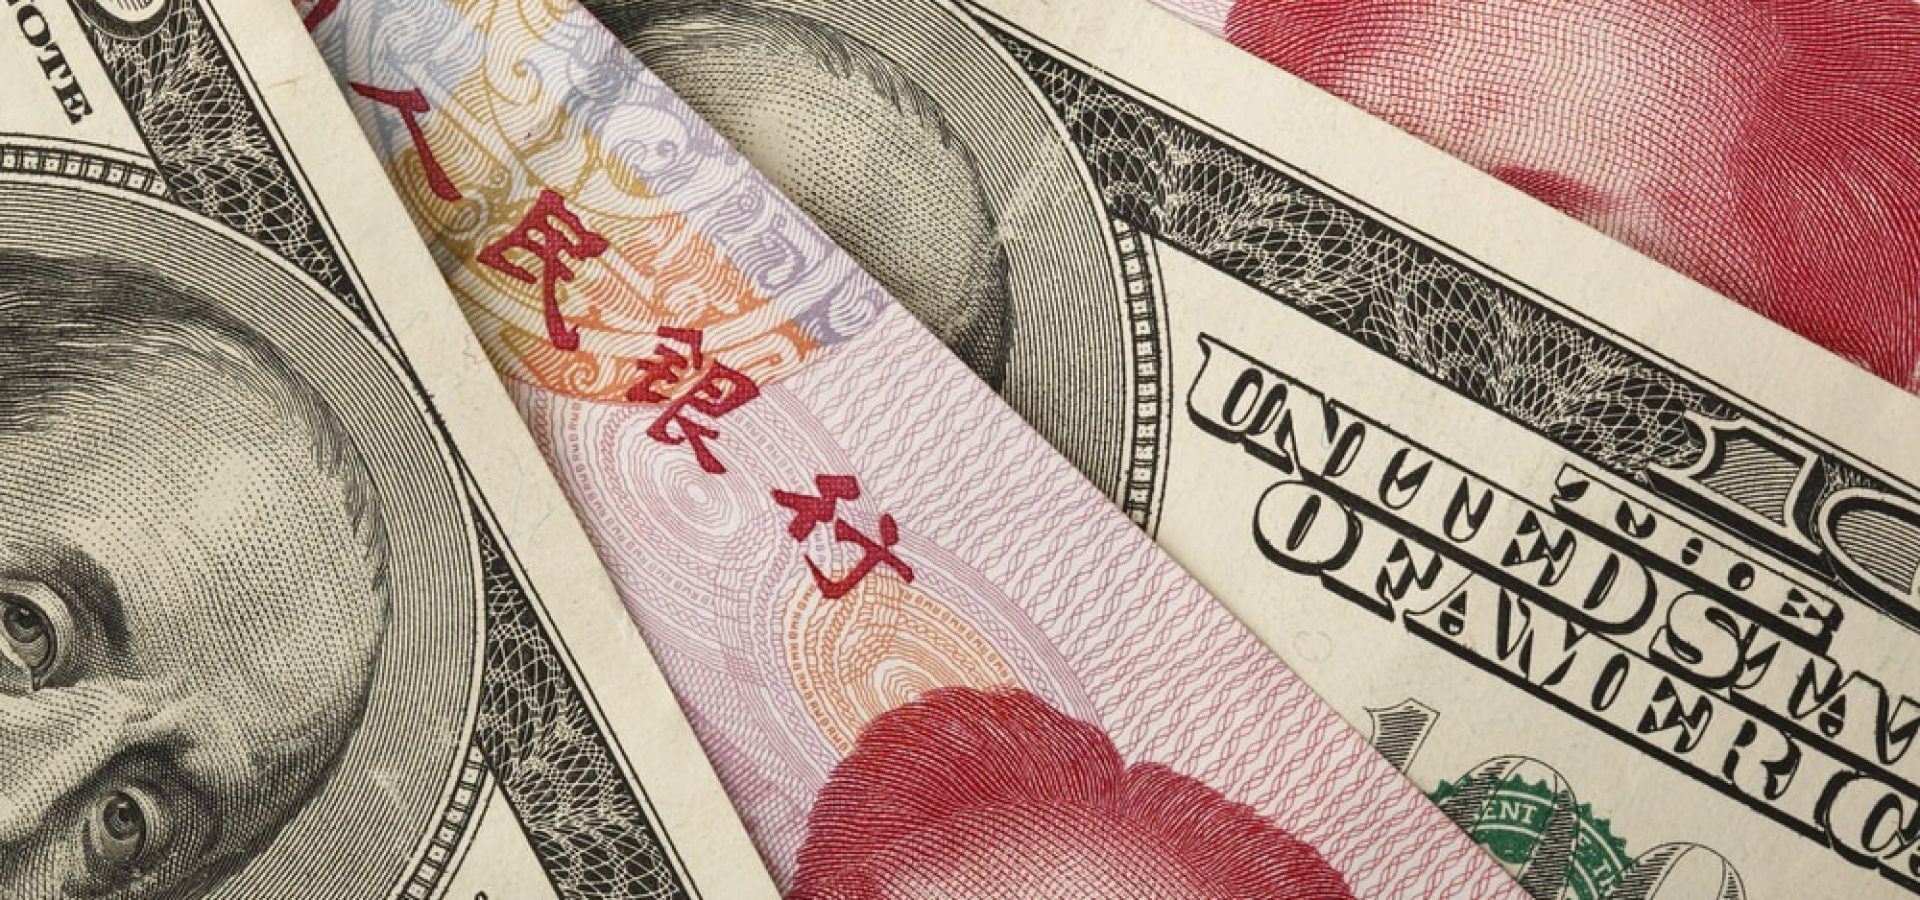 Forex Markets: Chinese yuan and US dollar bills.